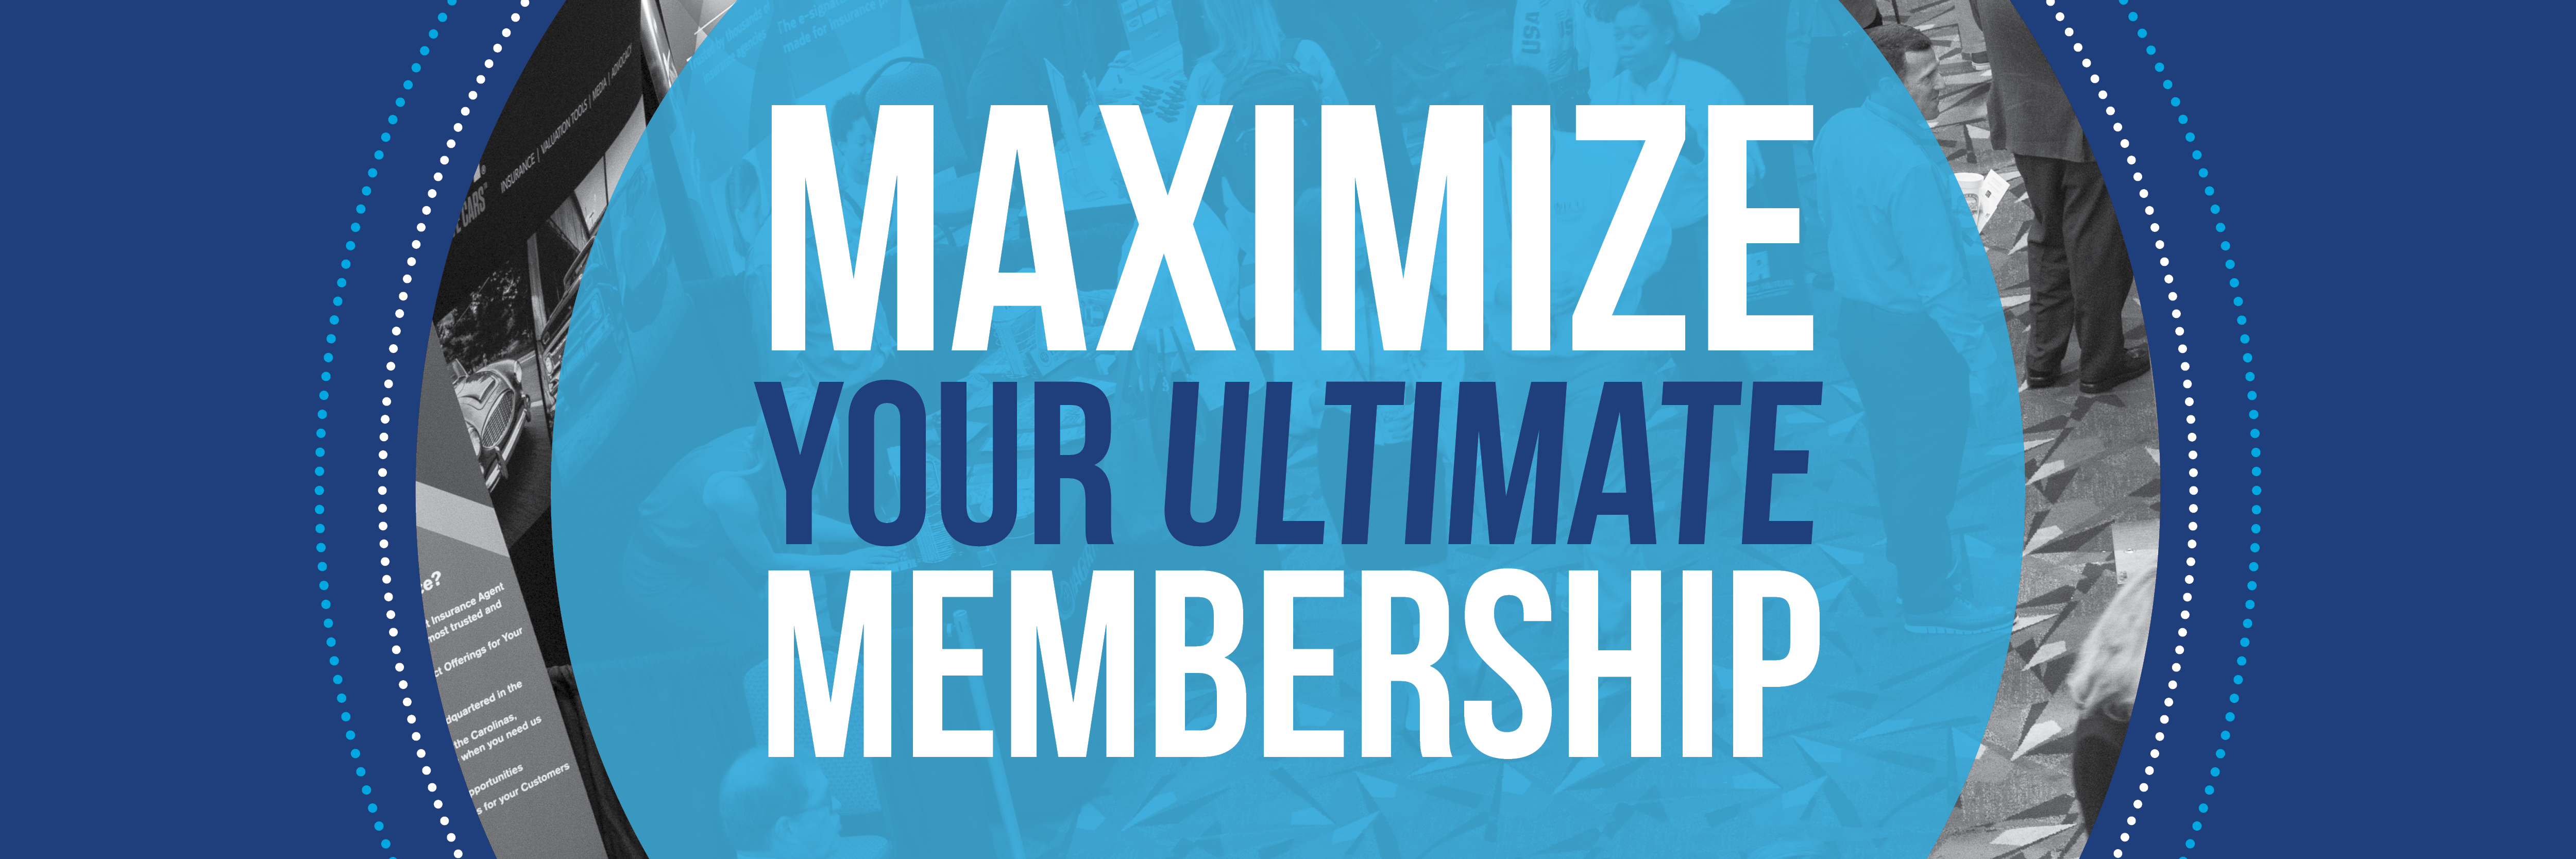 Maximize Your Ultimate Membership Header